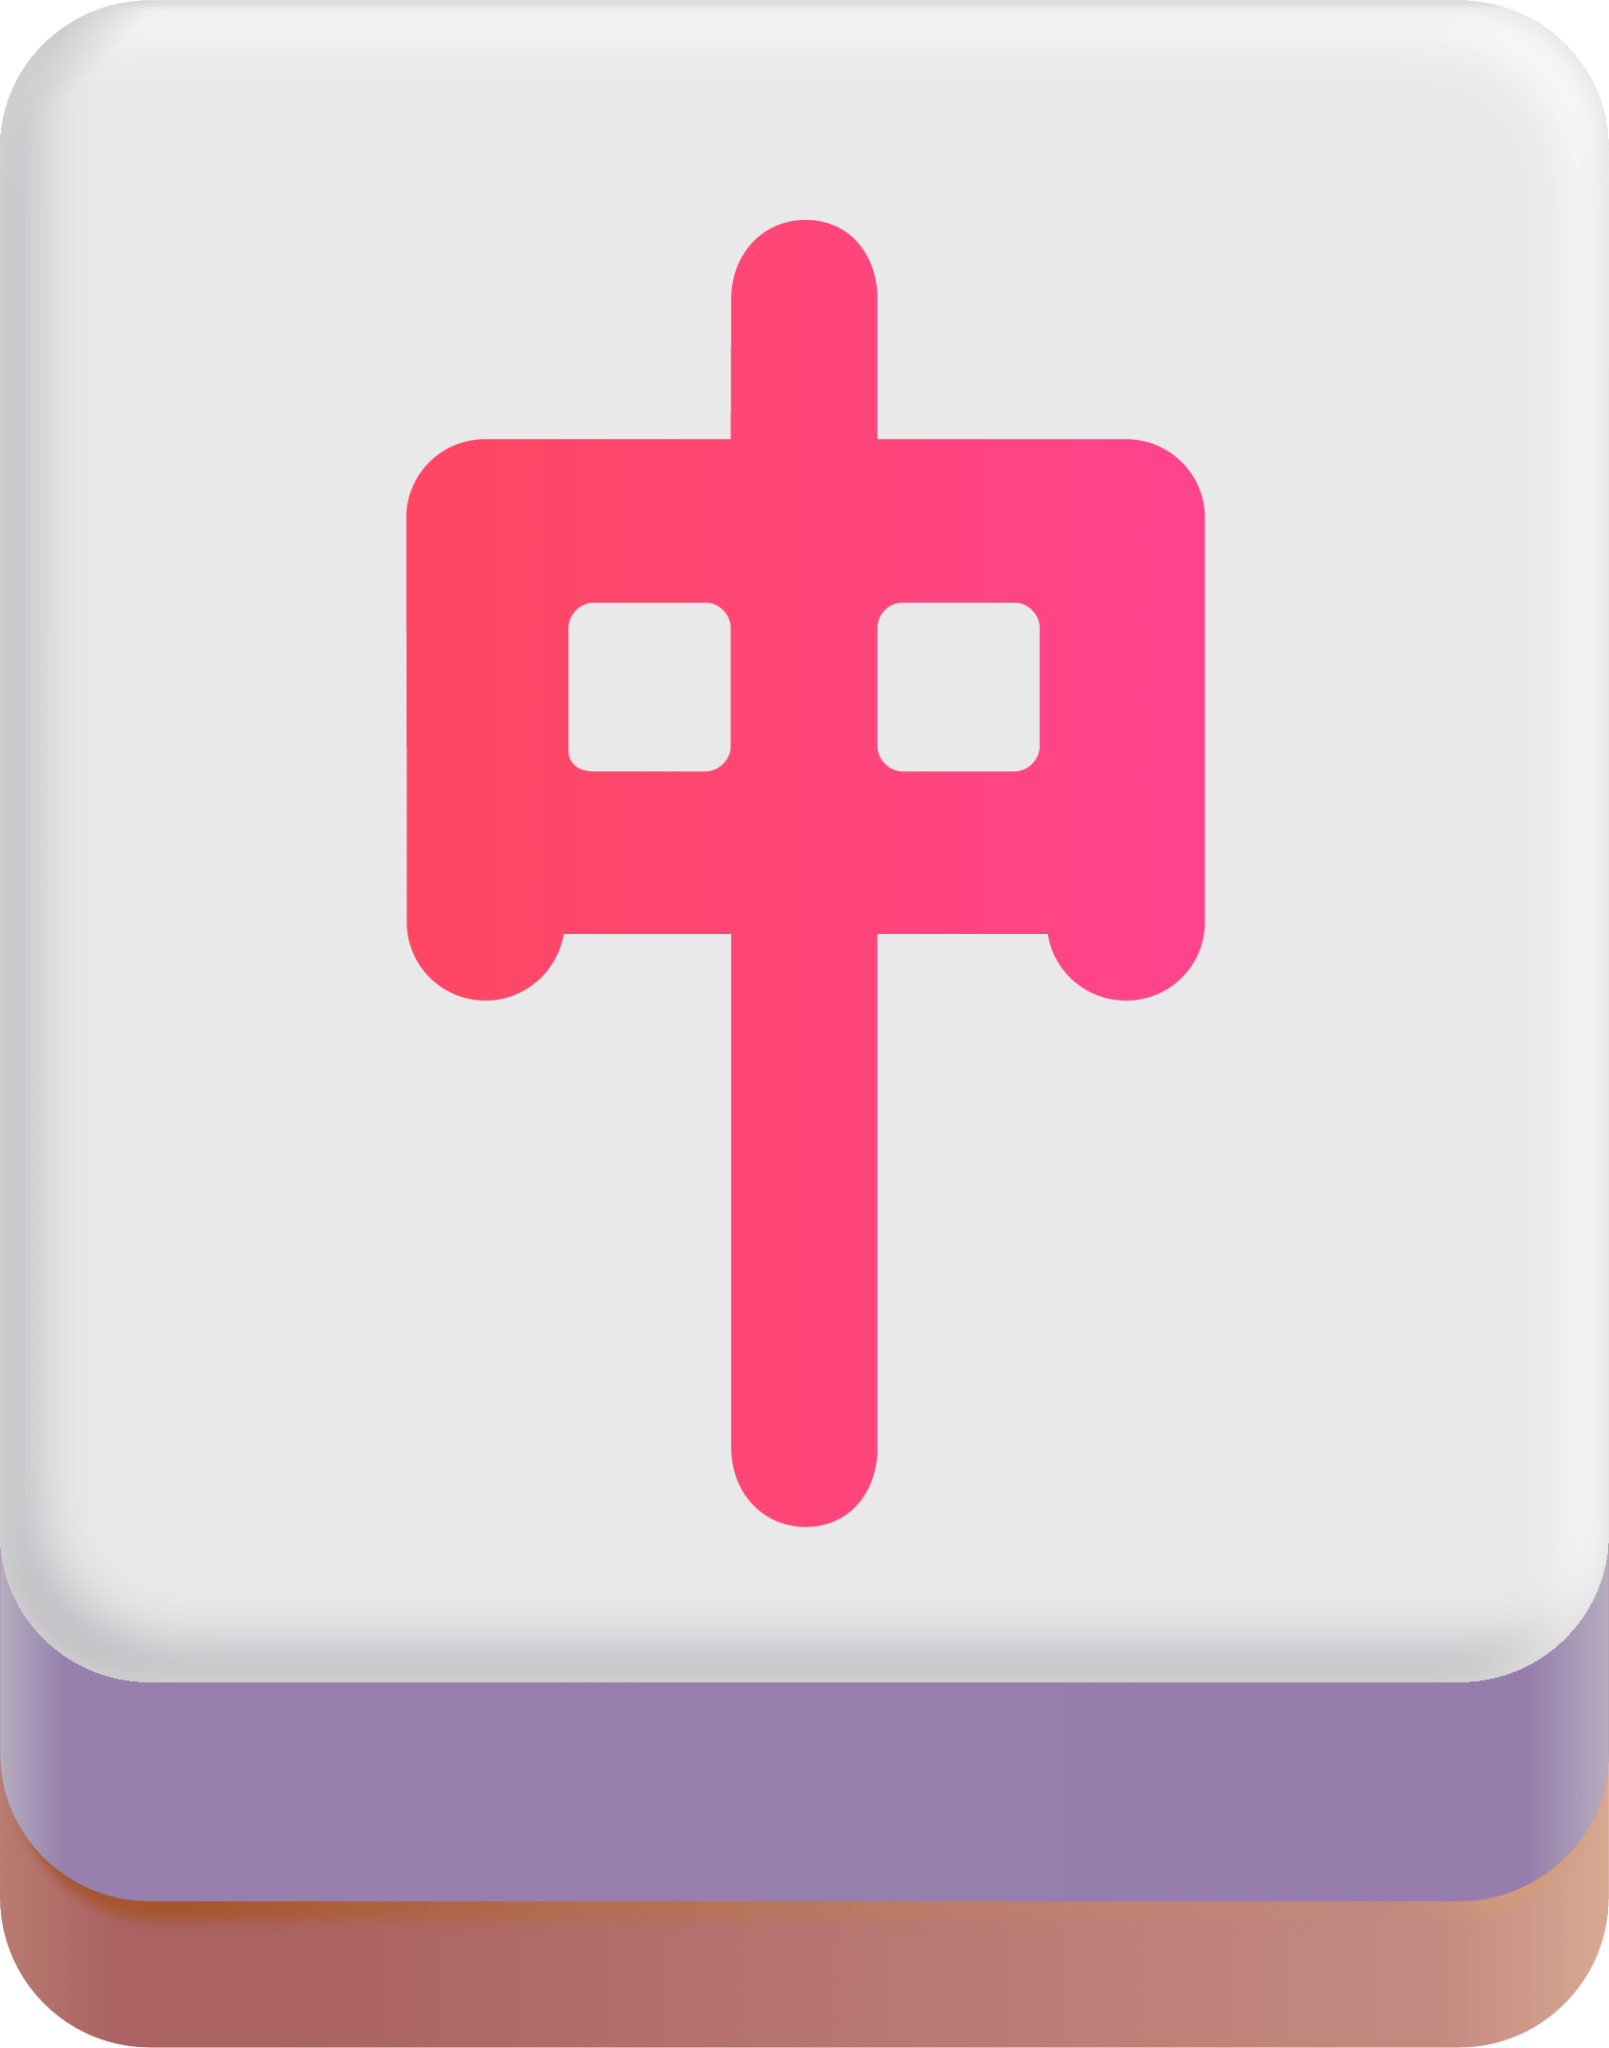 Mahjong Red Dragon Emoji (U+1F004, U+FE0F)